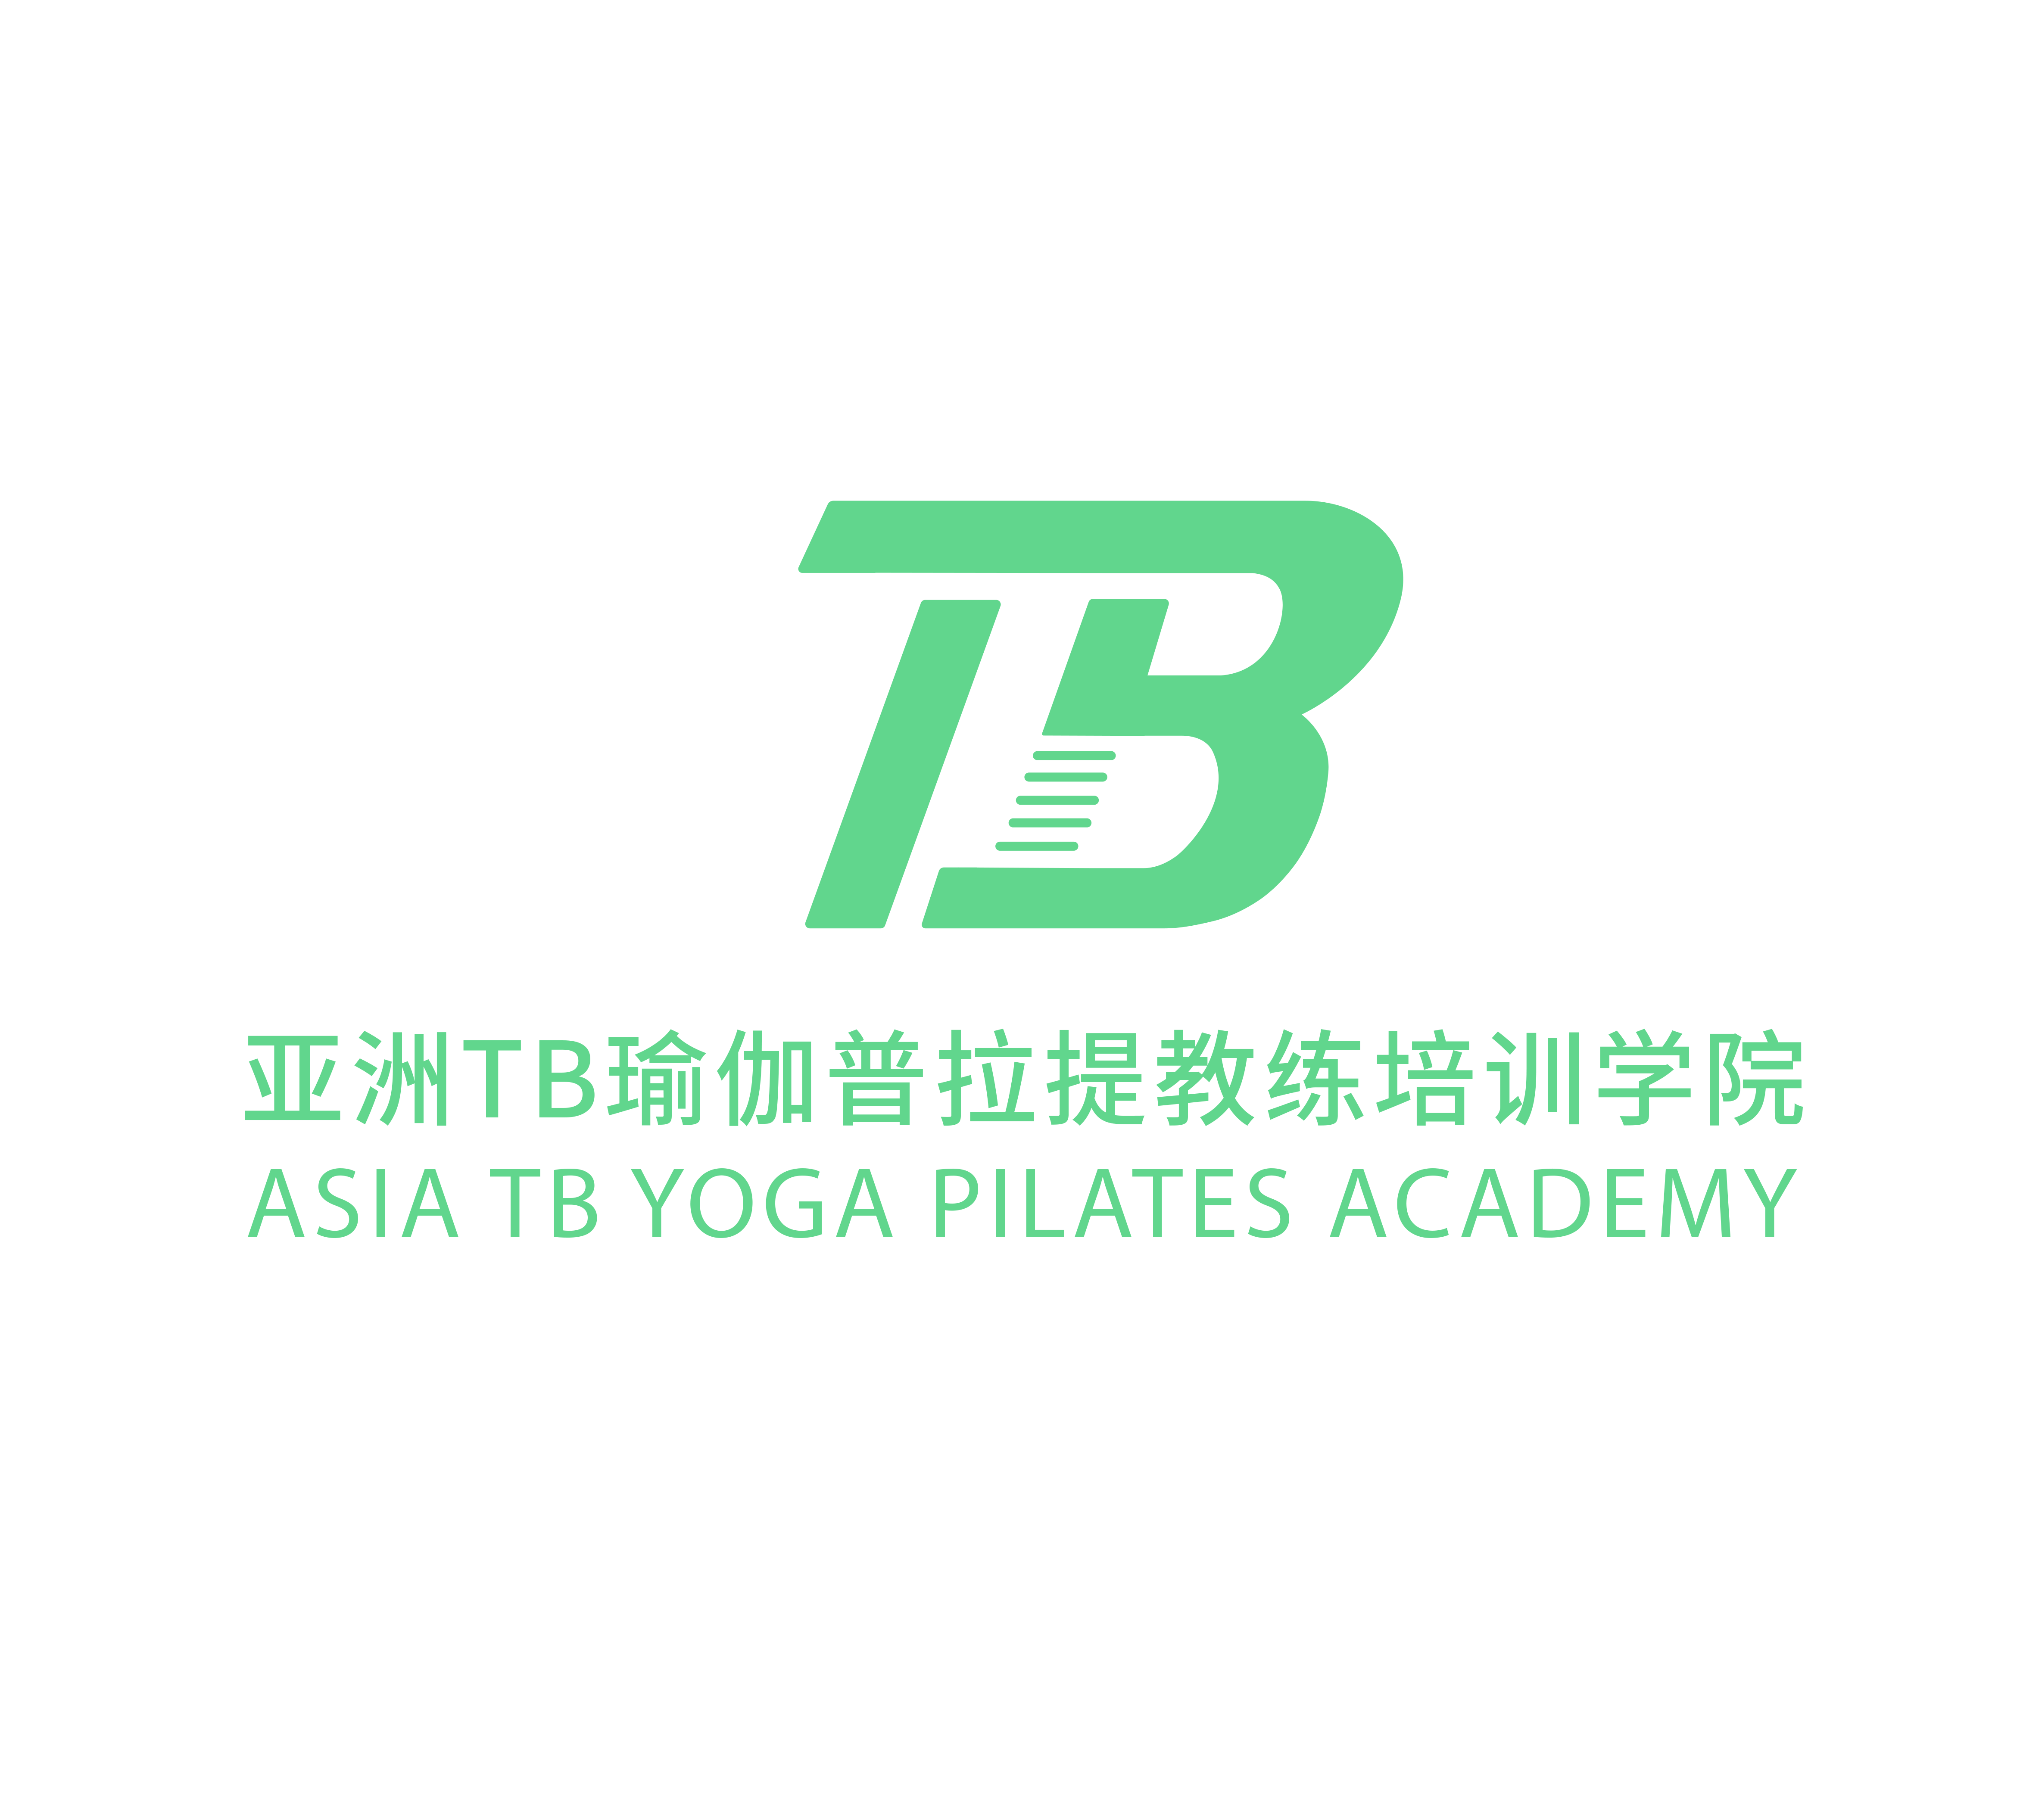 Asia Total Balance Yoga Pilates Academy